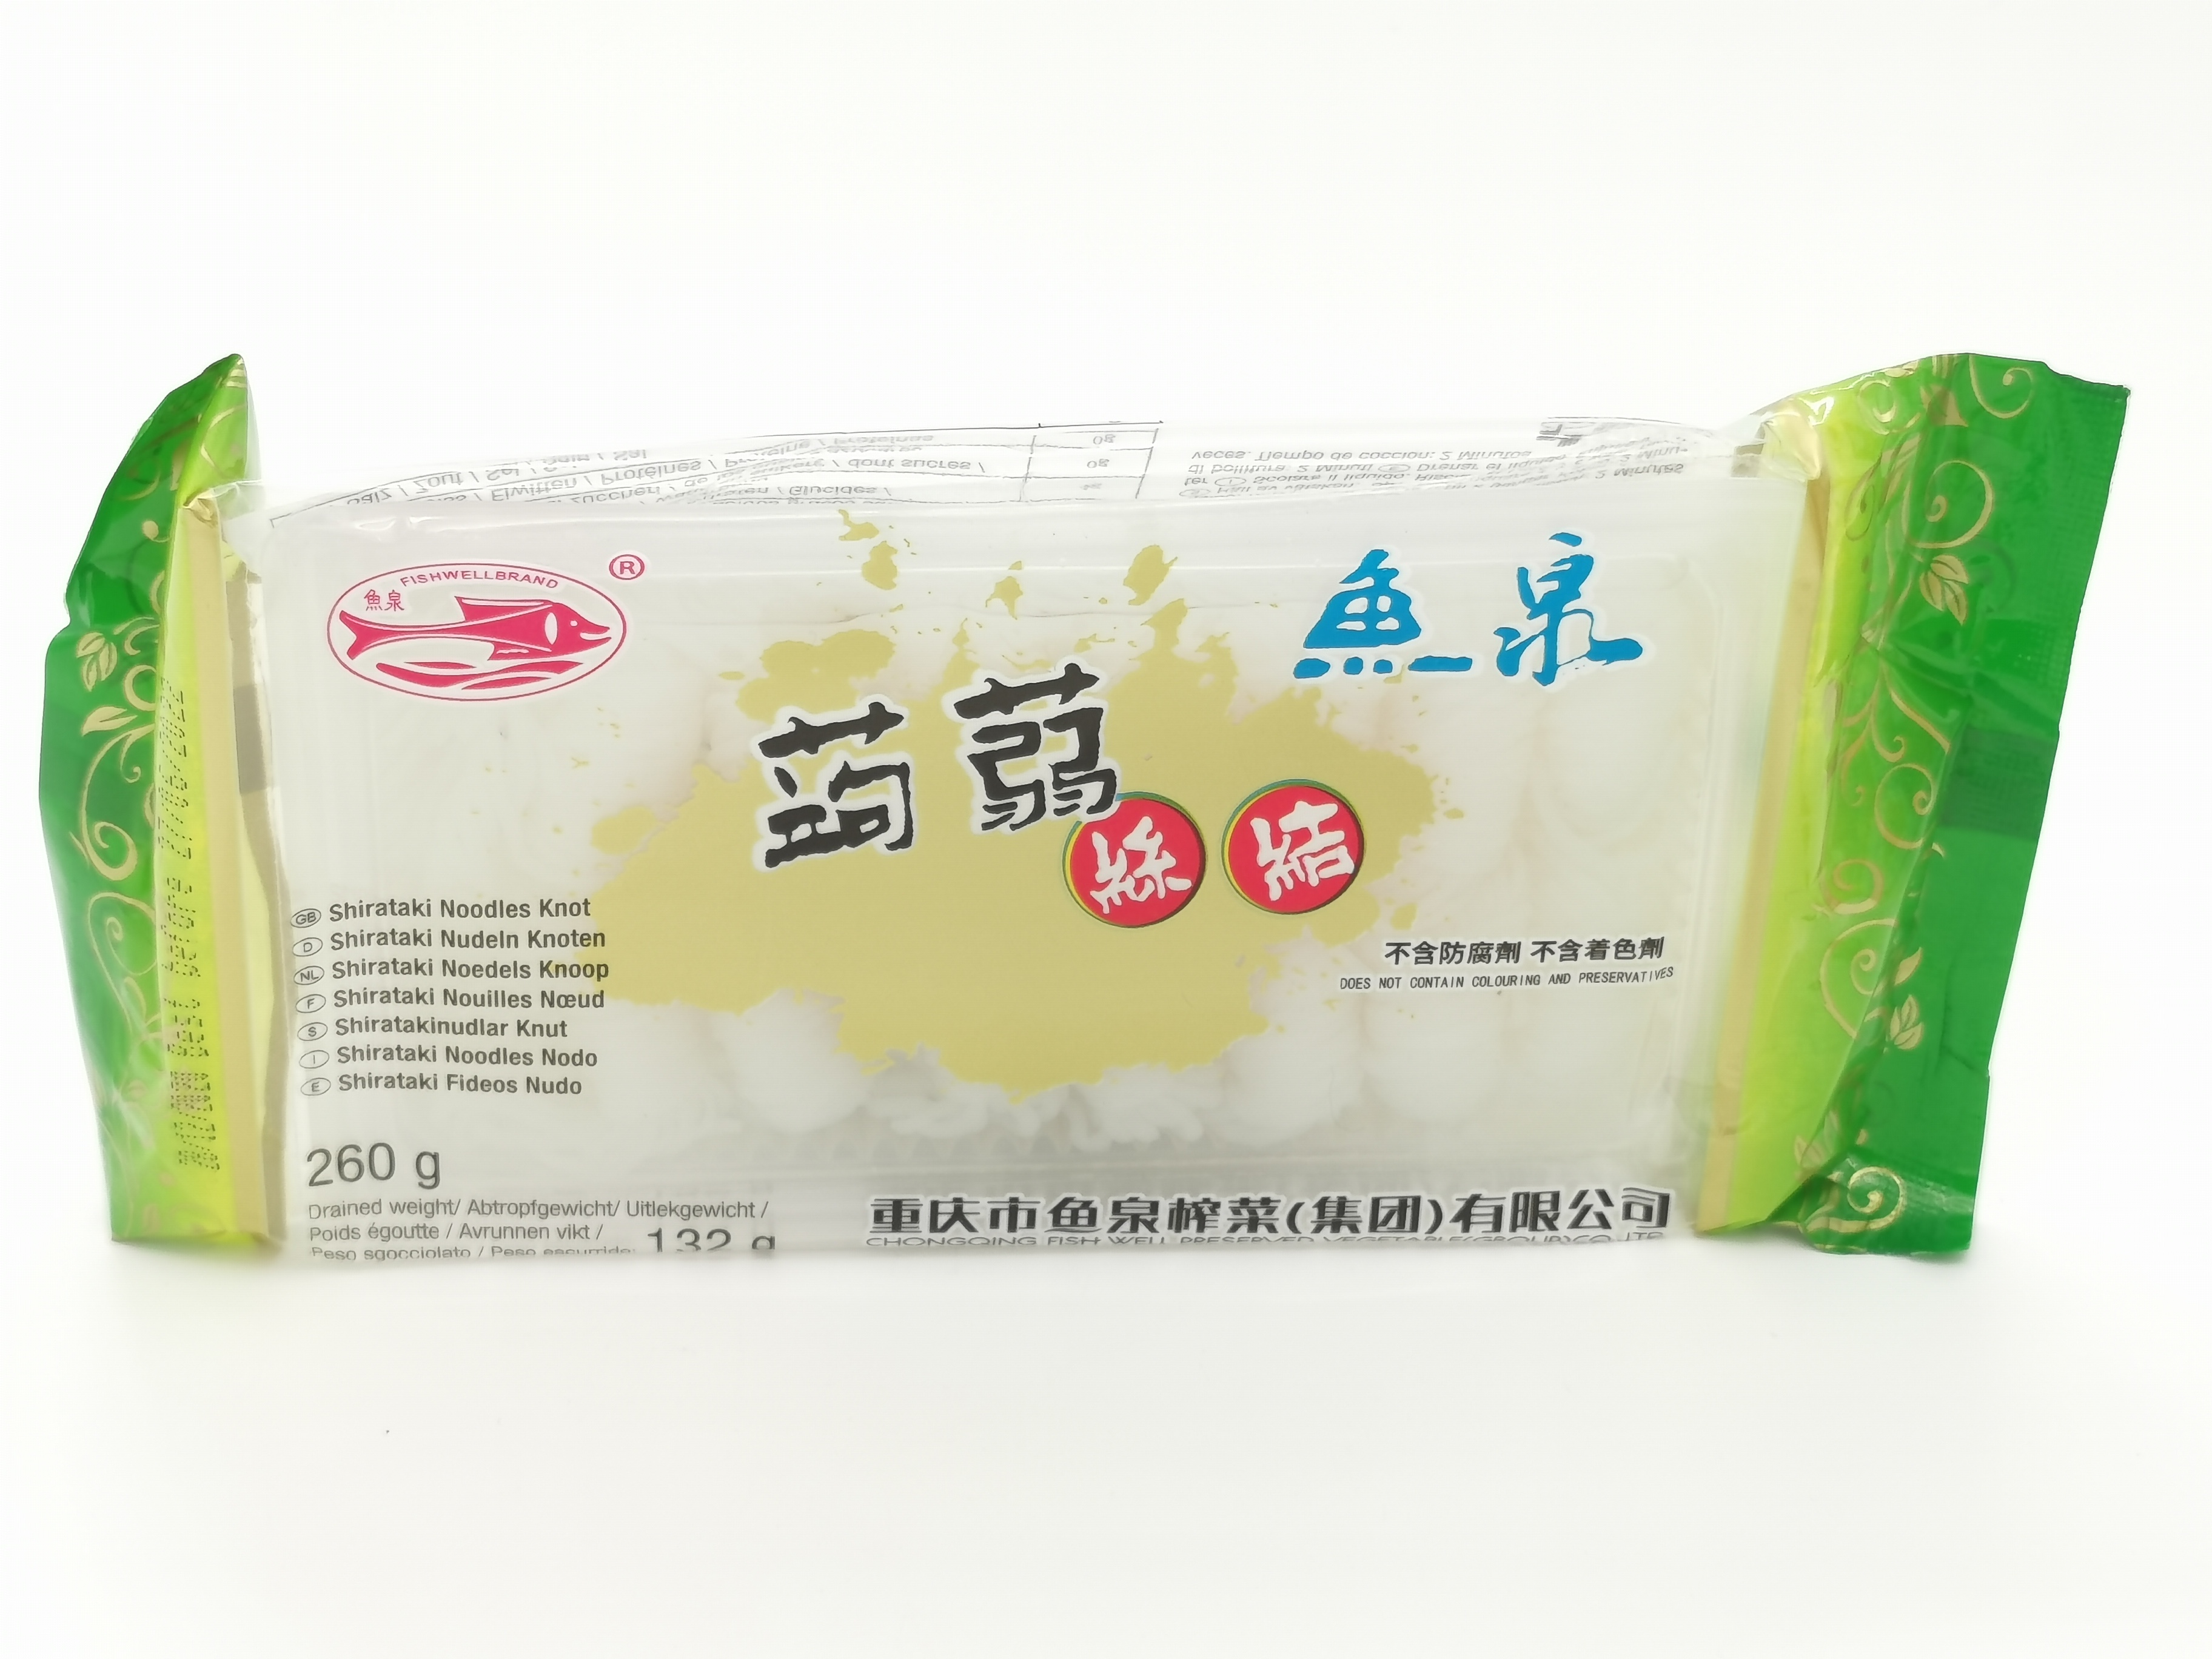 Fishwell Brand Shirataki Noodles Knot 260g